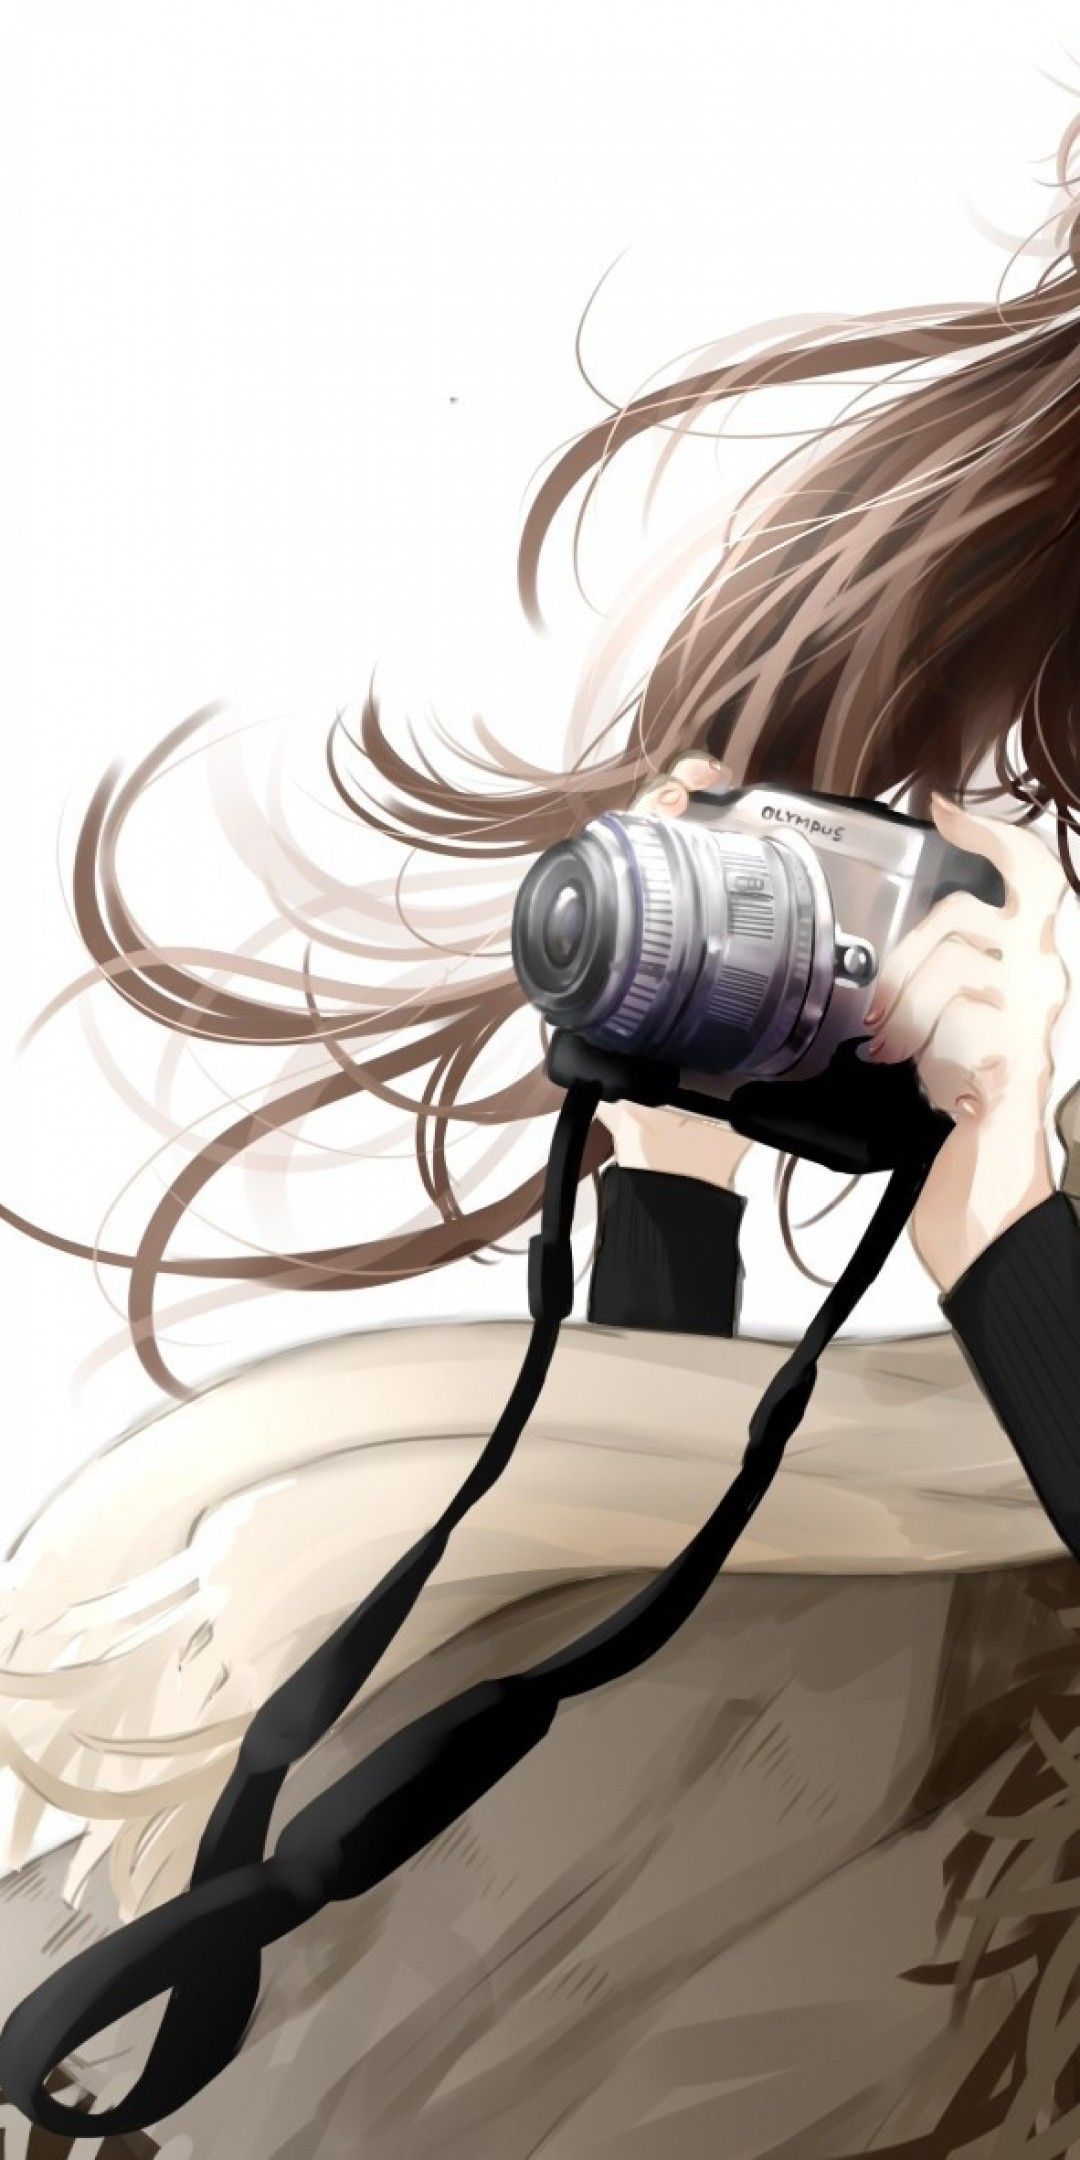 Photographer Anime Girl With Camera